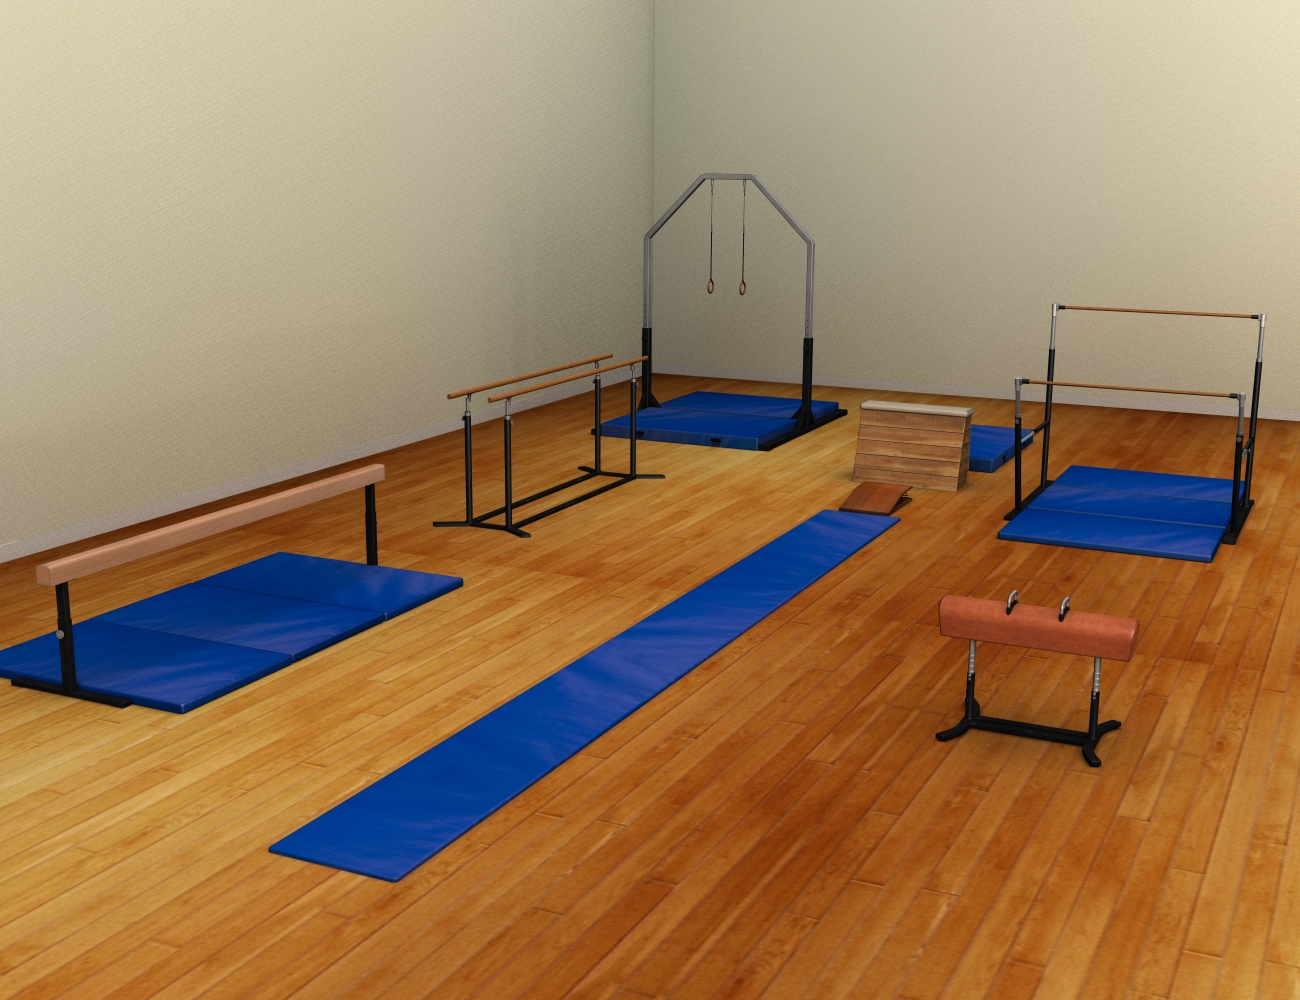 Gymnastics Equipment by: hypnagogia, 3D Models by Daz 3D